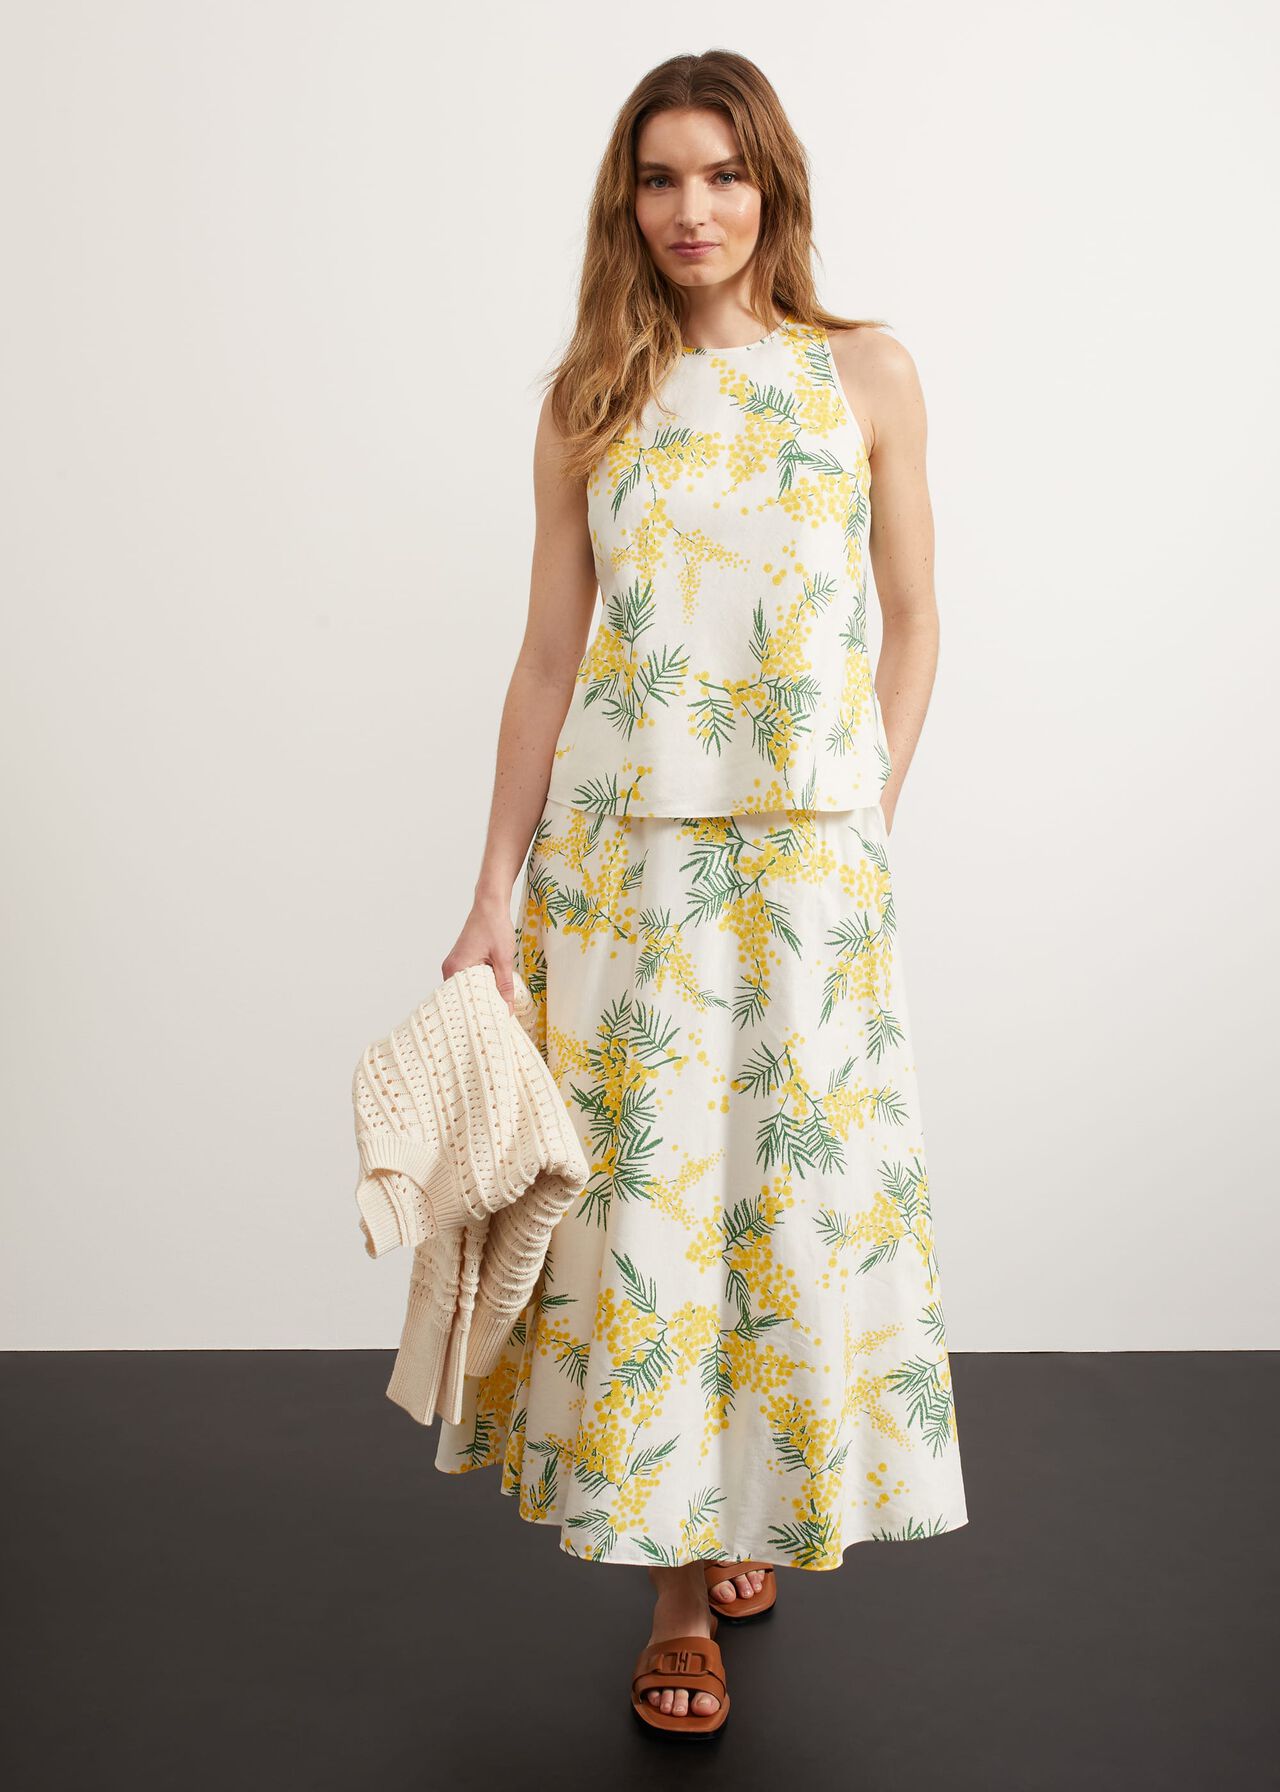 Foxcote Floral Skirt, Ivory Multi, hi-res